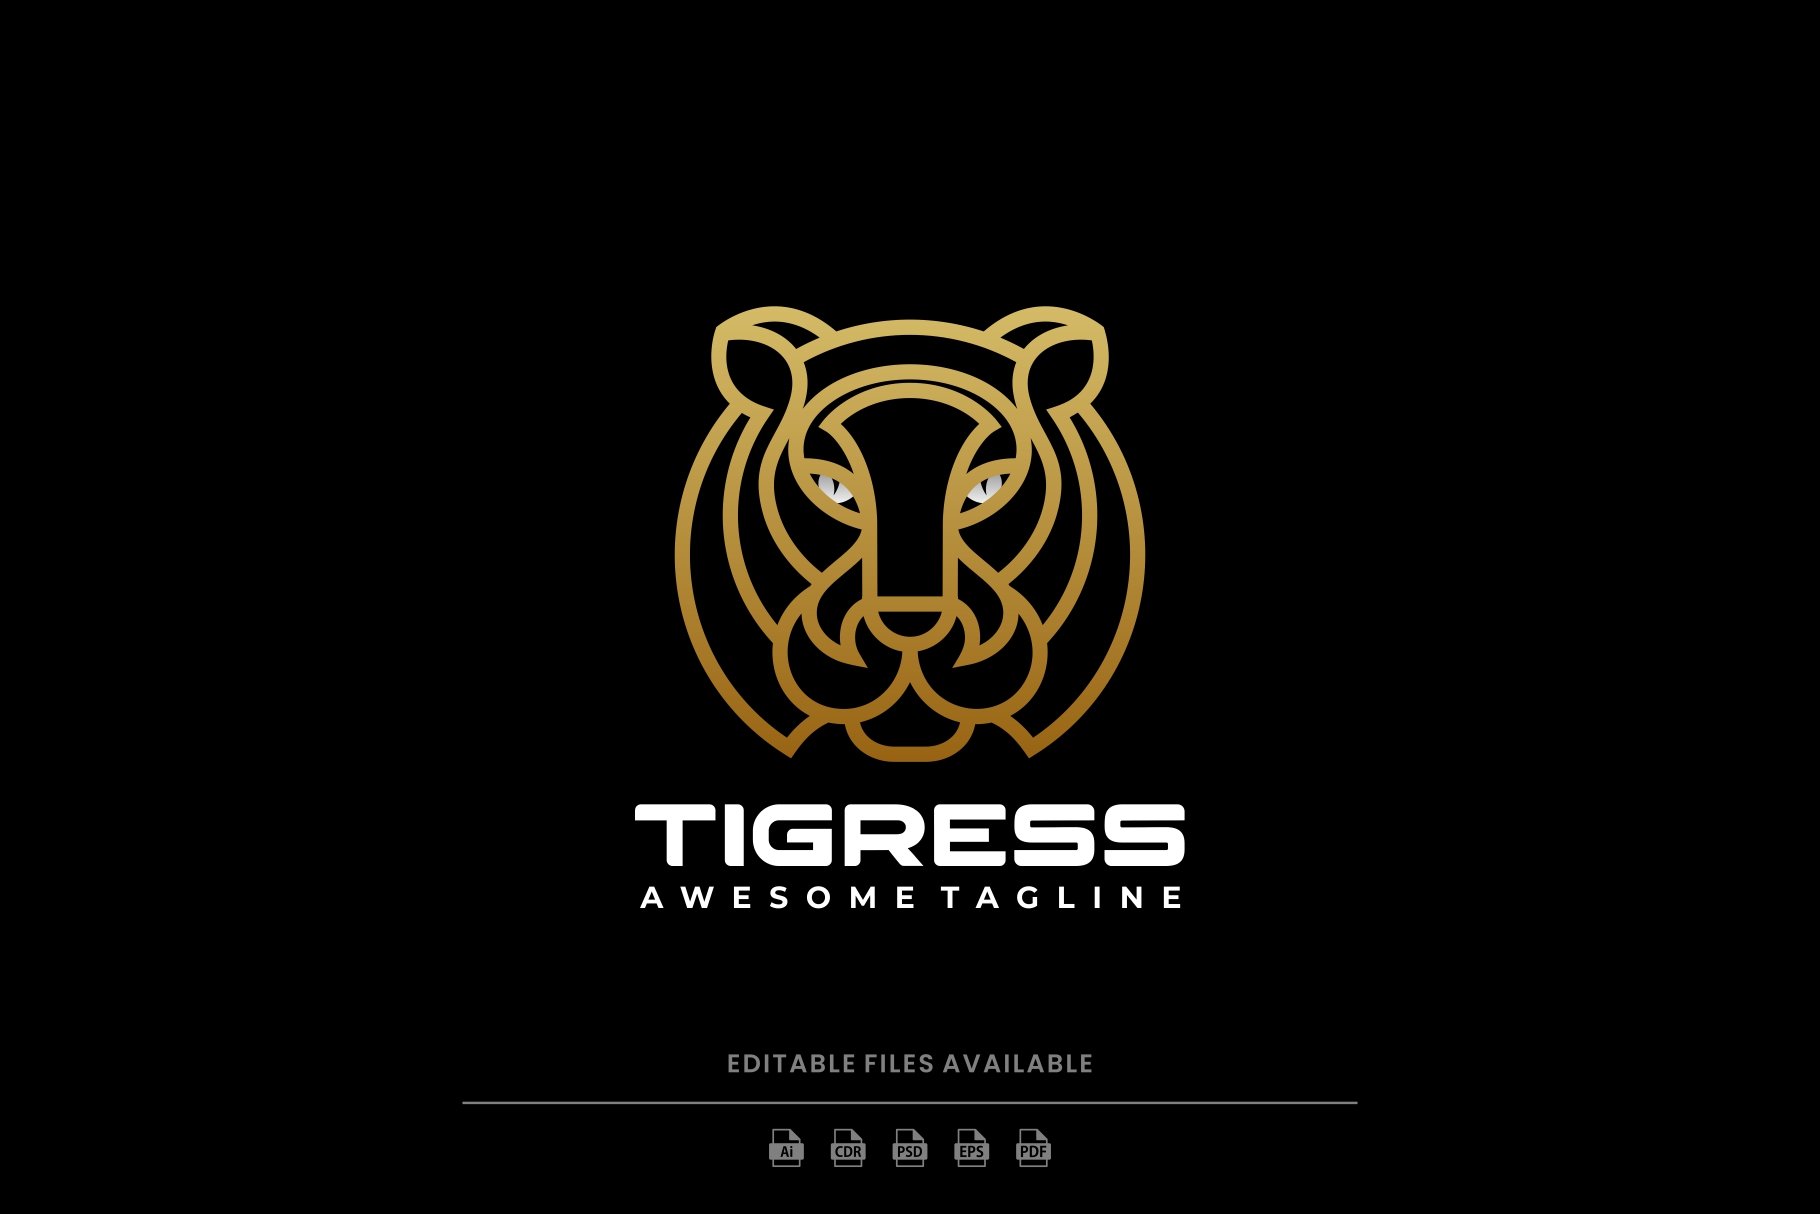 Tiger Line Art Logo cover image.